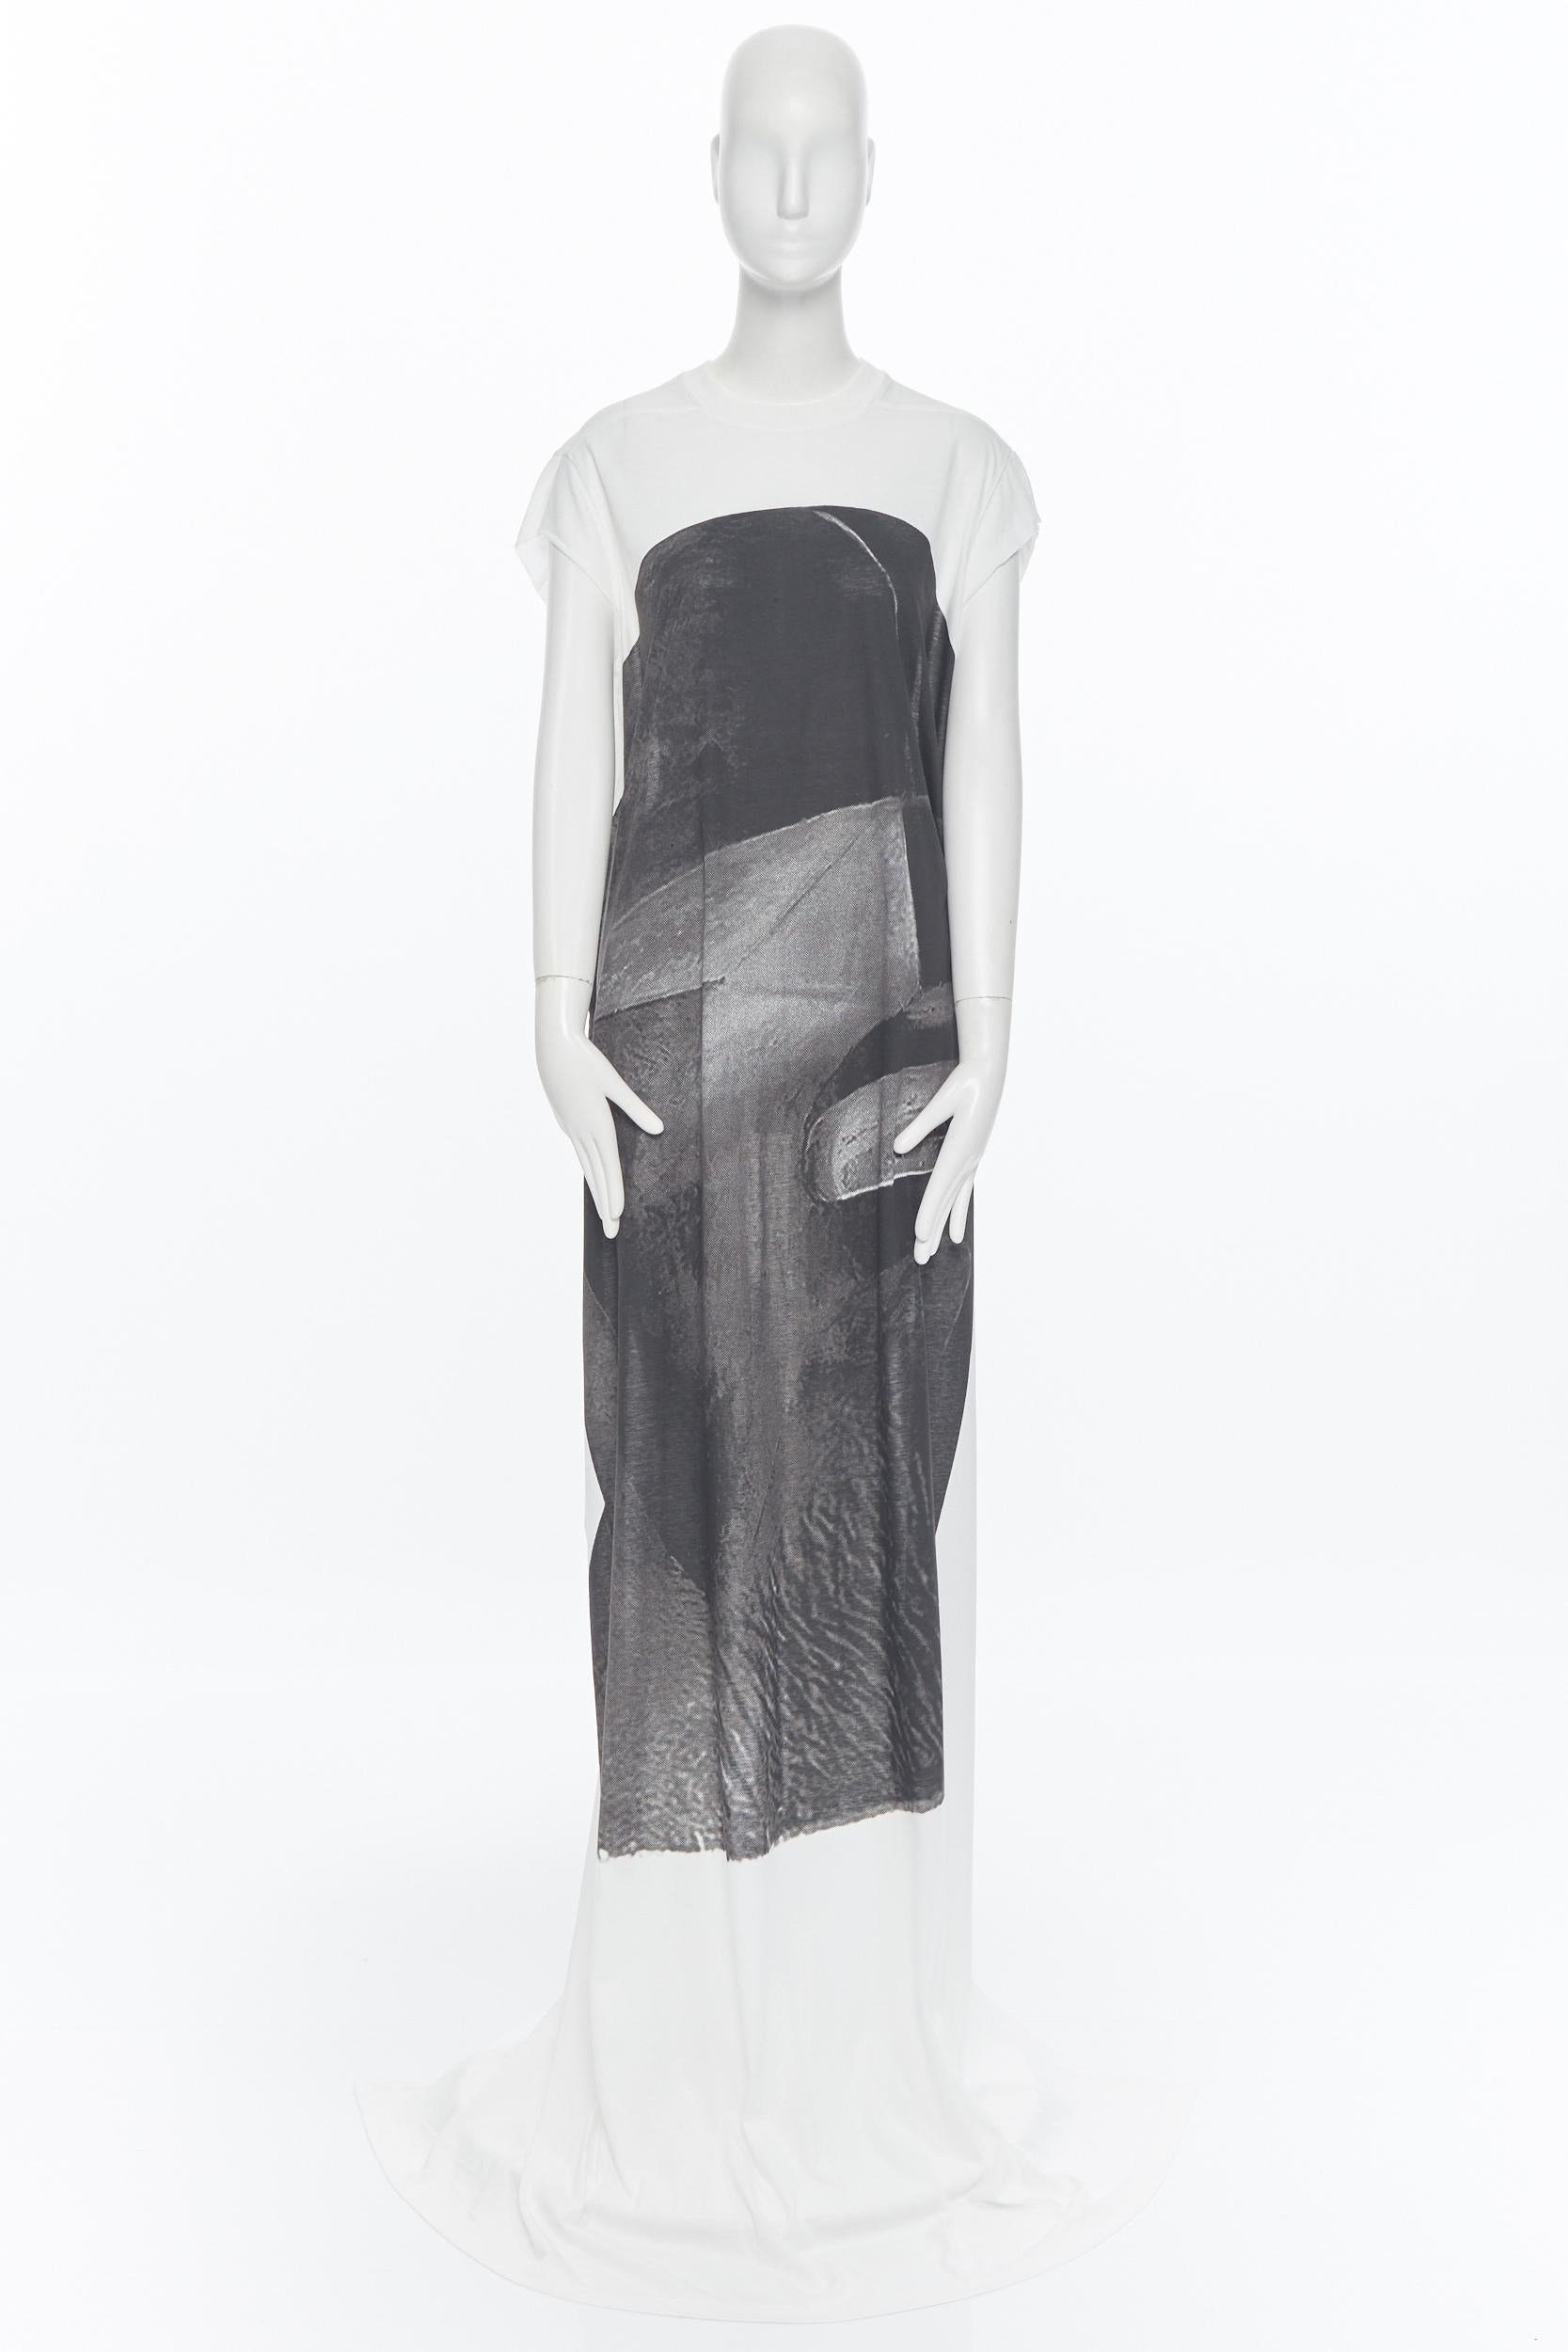 Gray new RICK OWENS DRKSHDW SS18 Dirt Jumbo white black photo print t-shirt dress OS